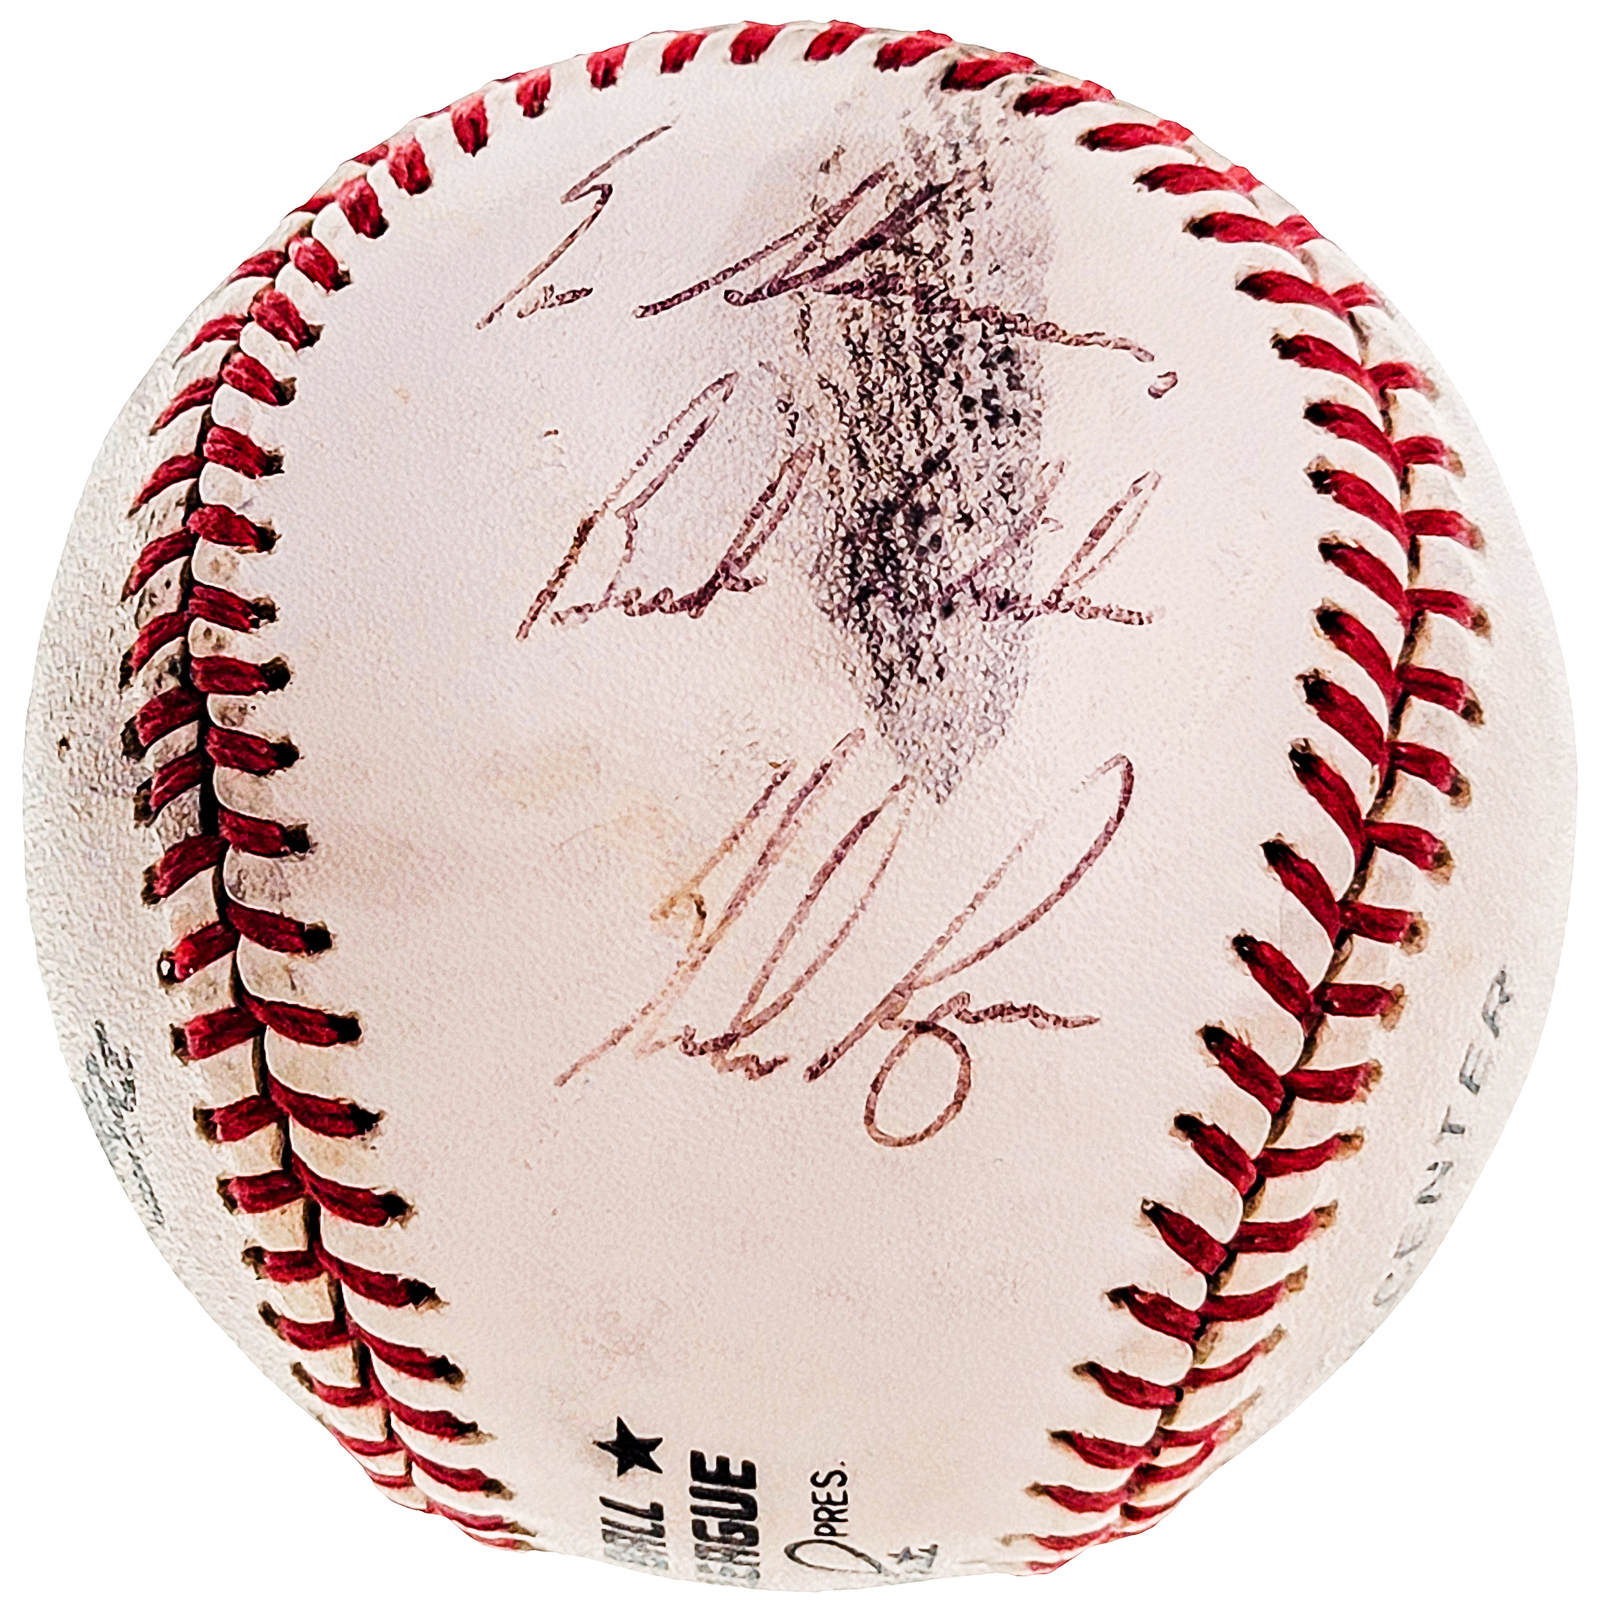 Nolan Ryan Autographed 4 Inscriptions Official MLB Baseball - BAS